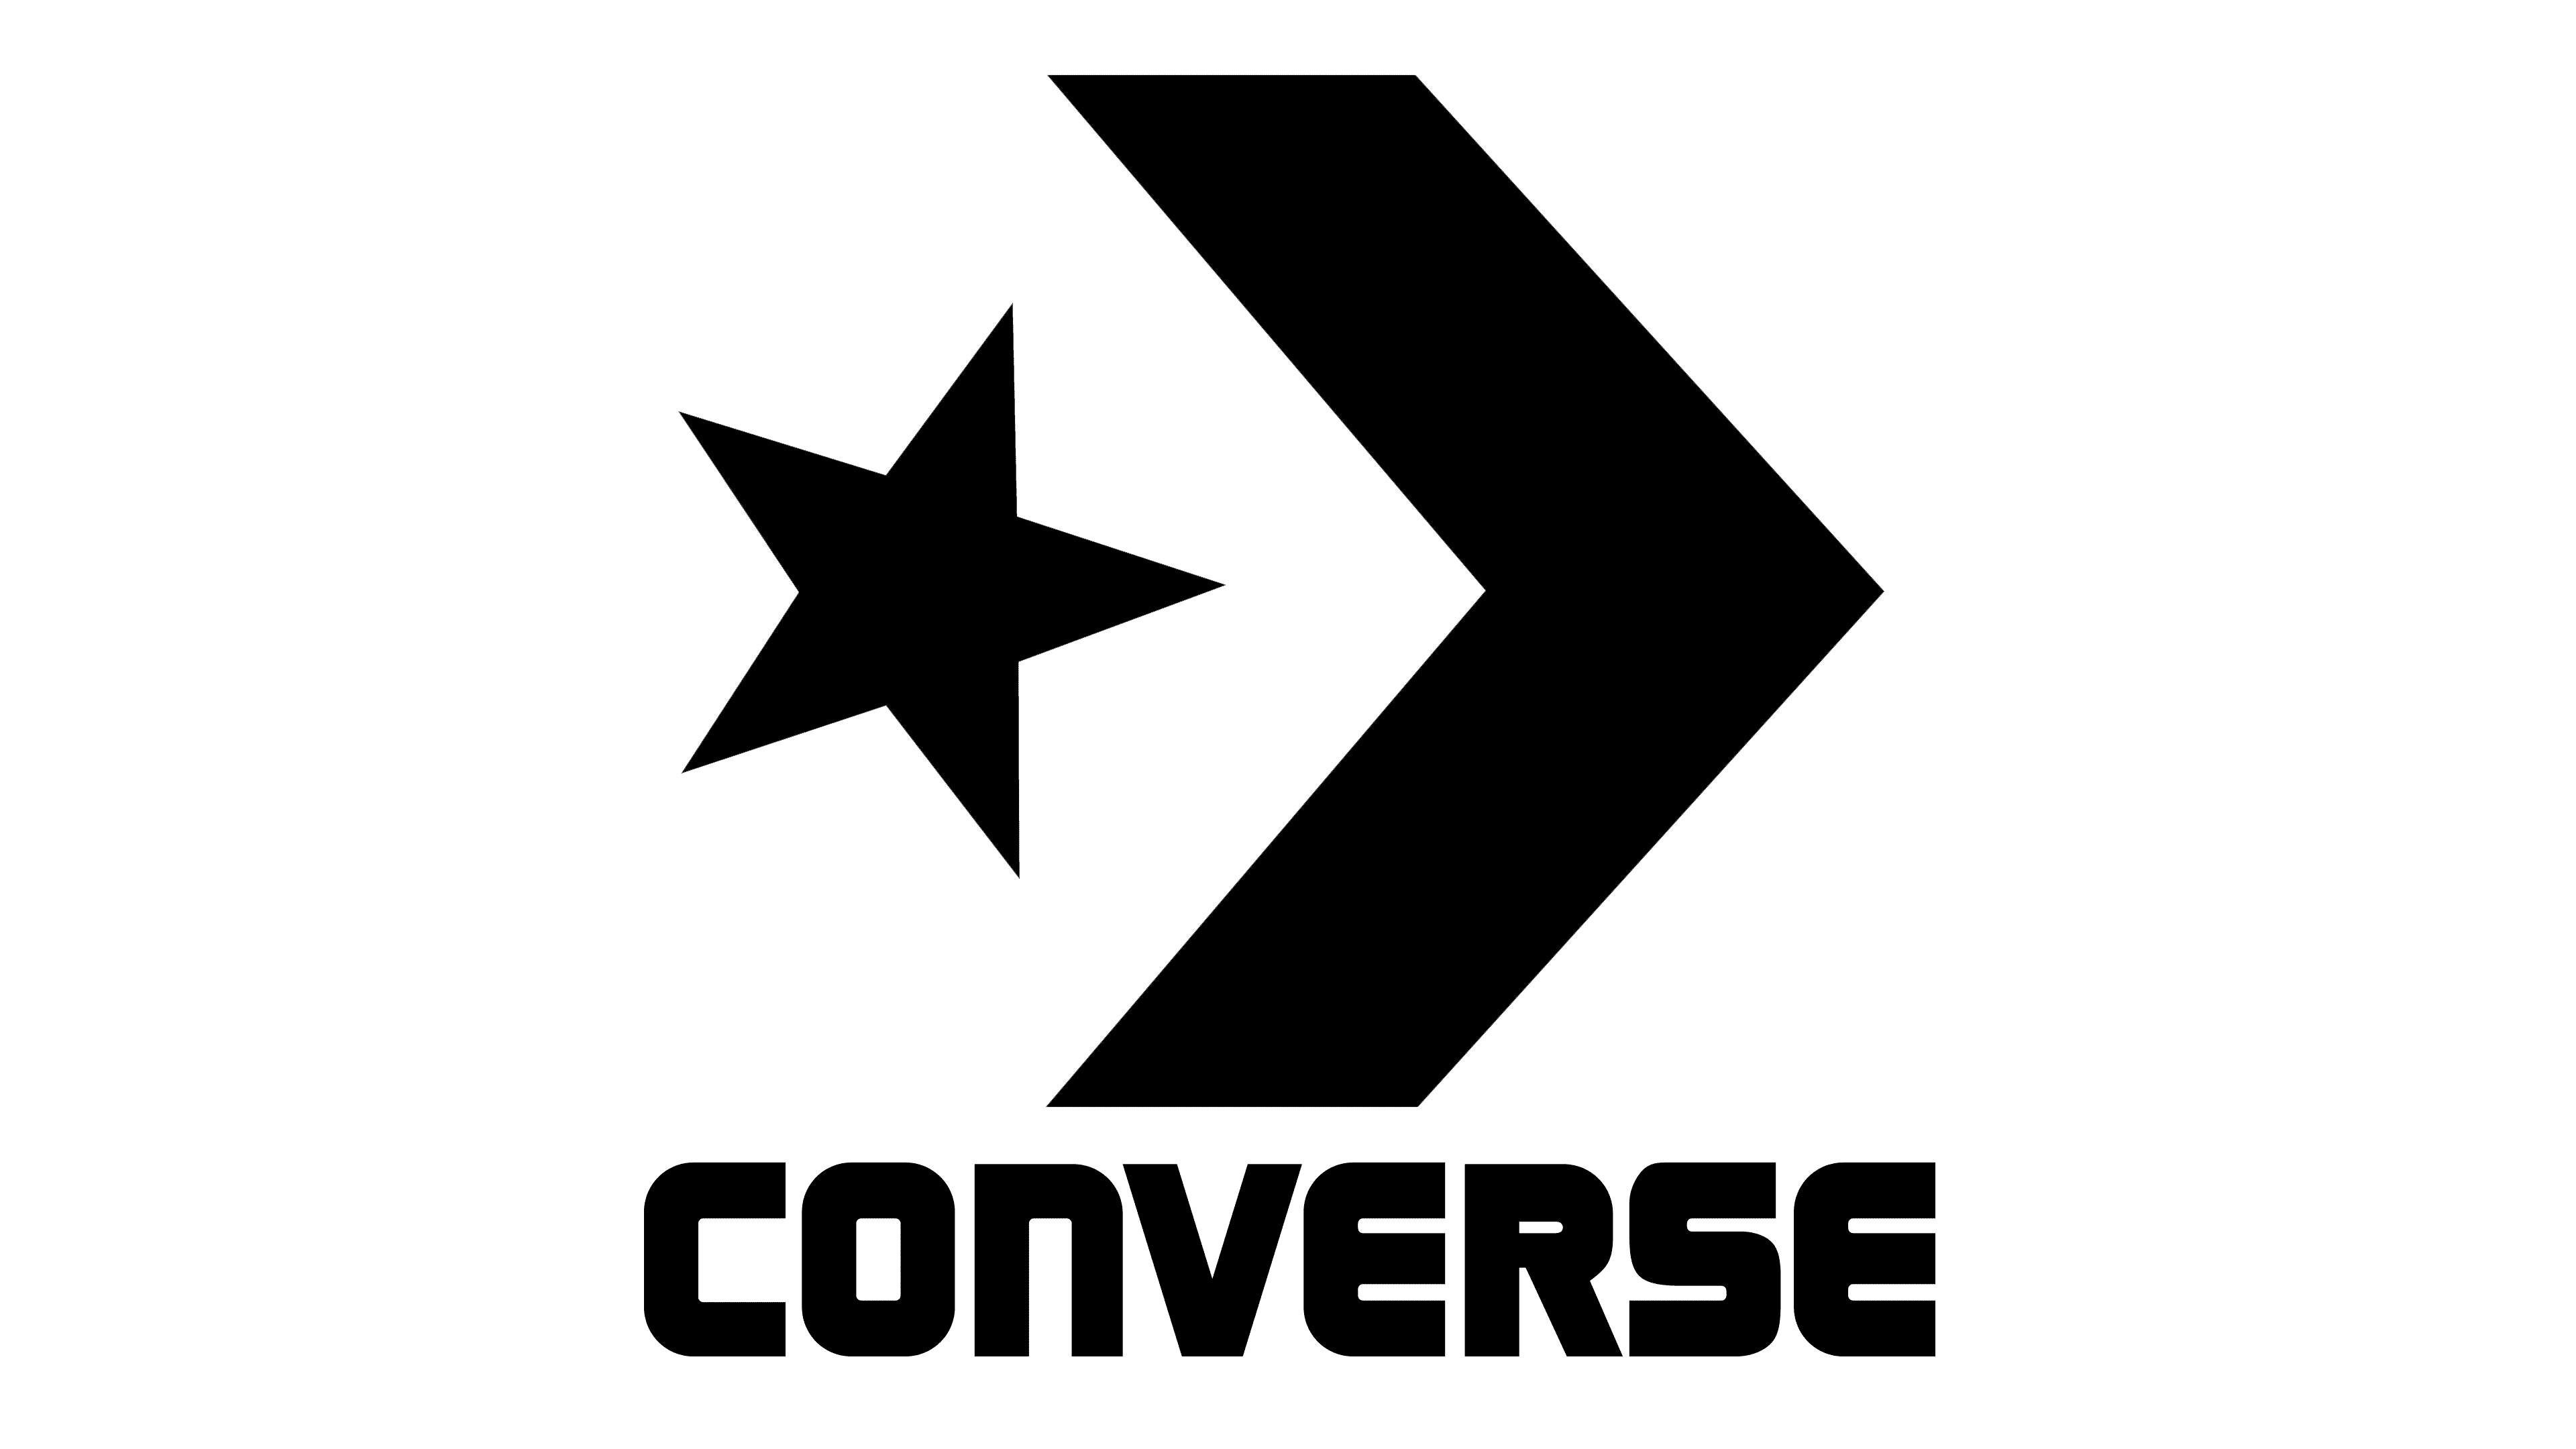 All Star: Converse Logo History, Symbol And Evolution